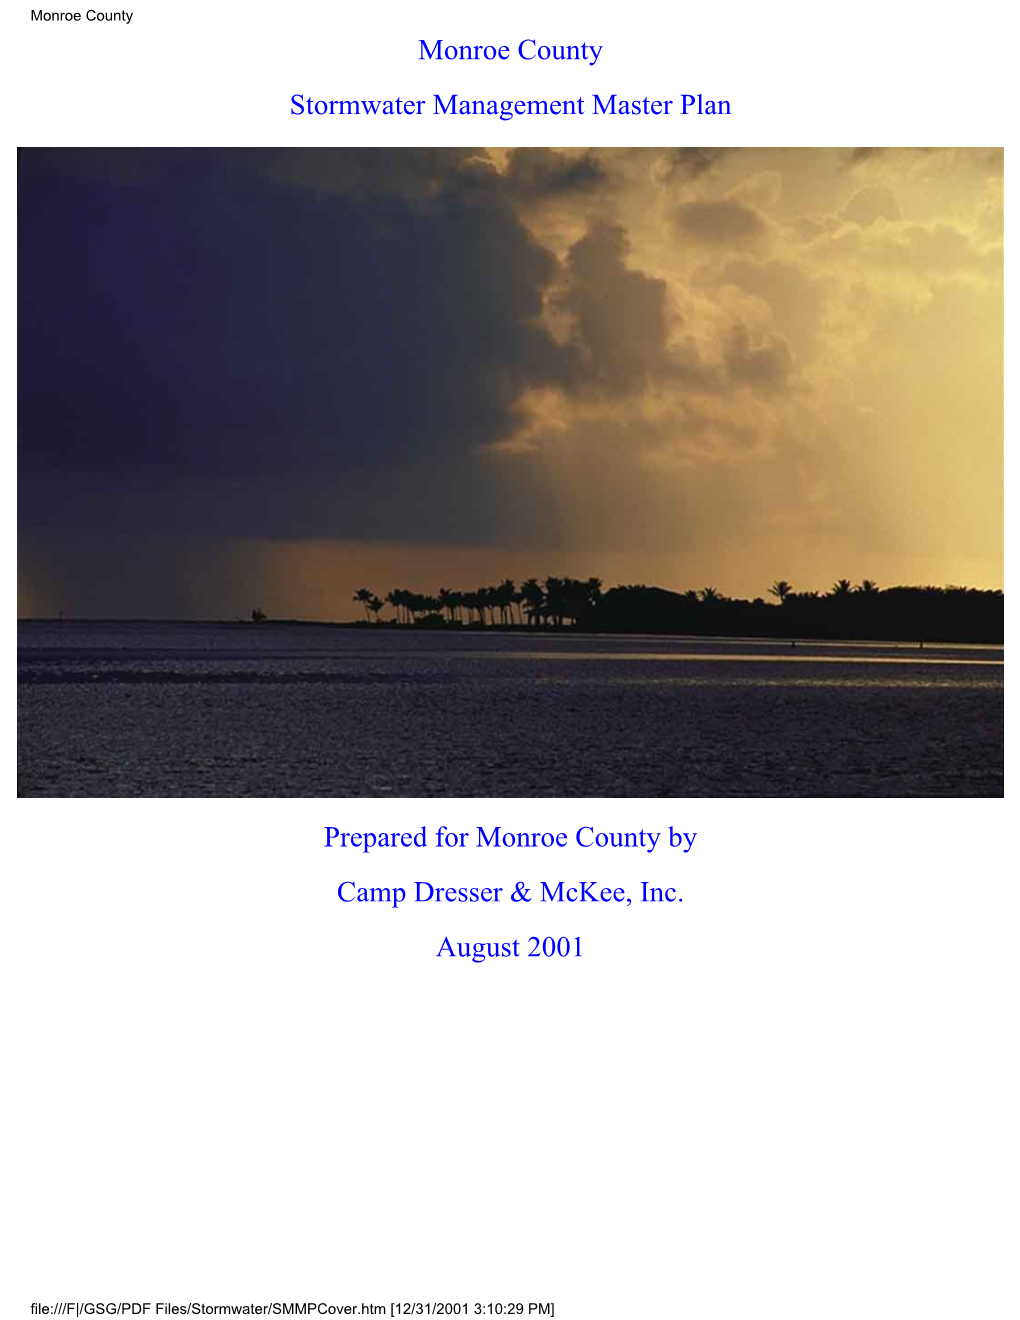 Stormwater Management Master Plan